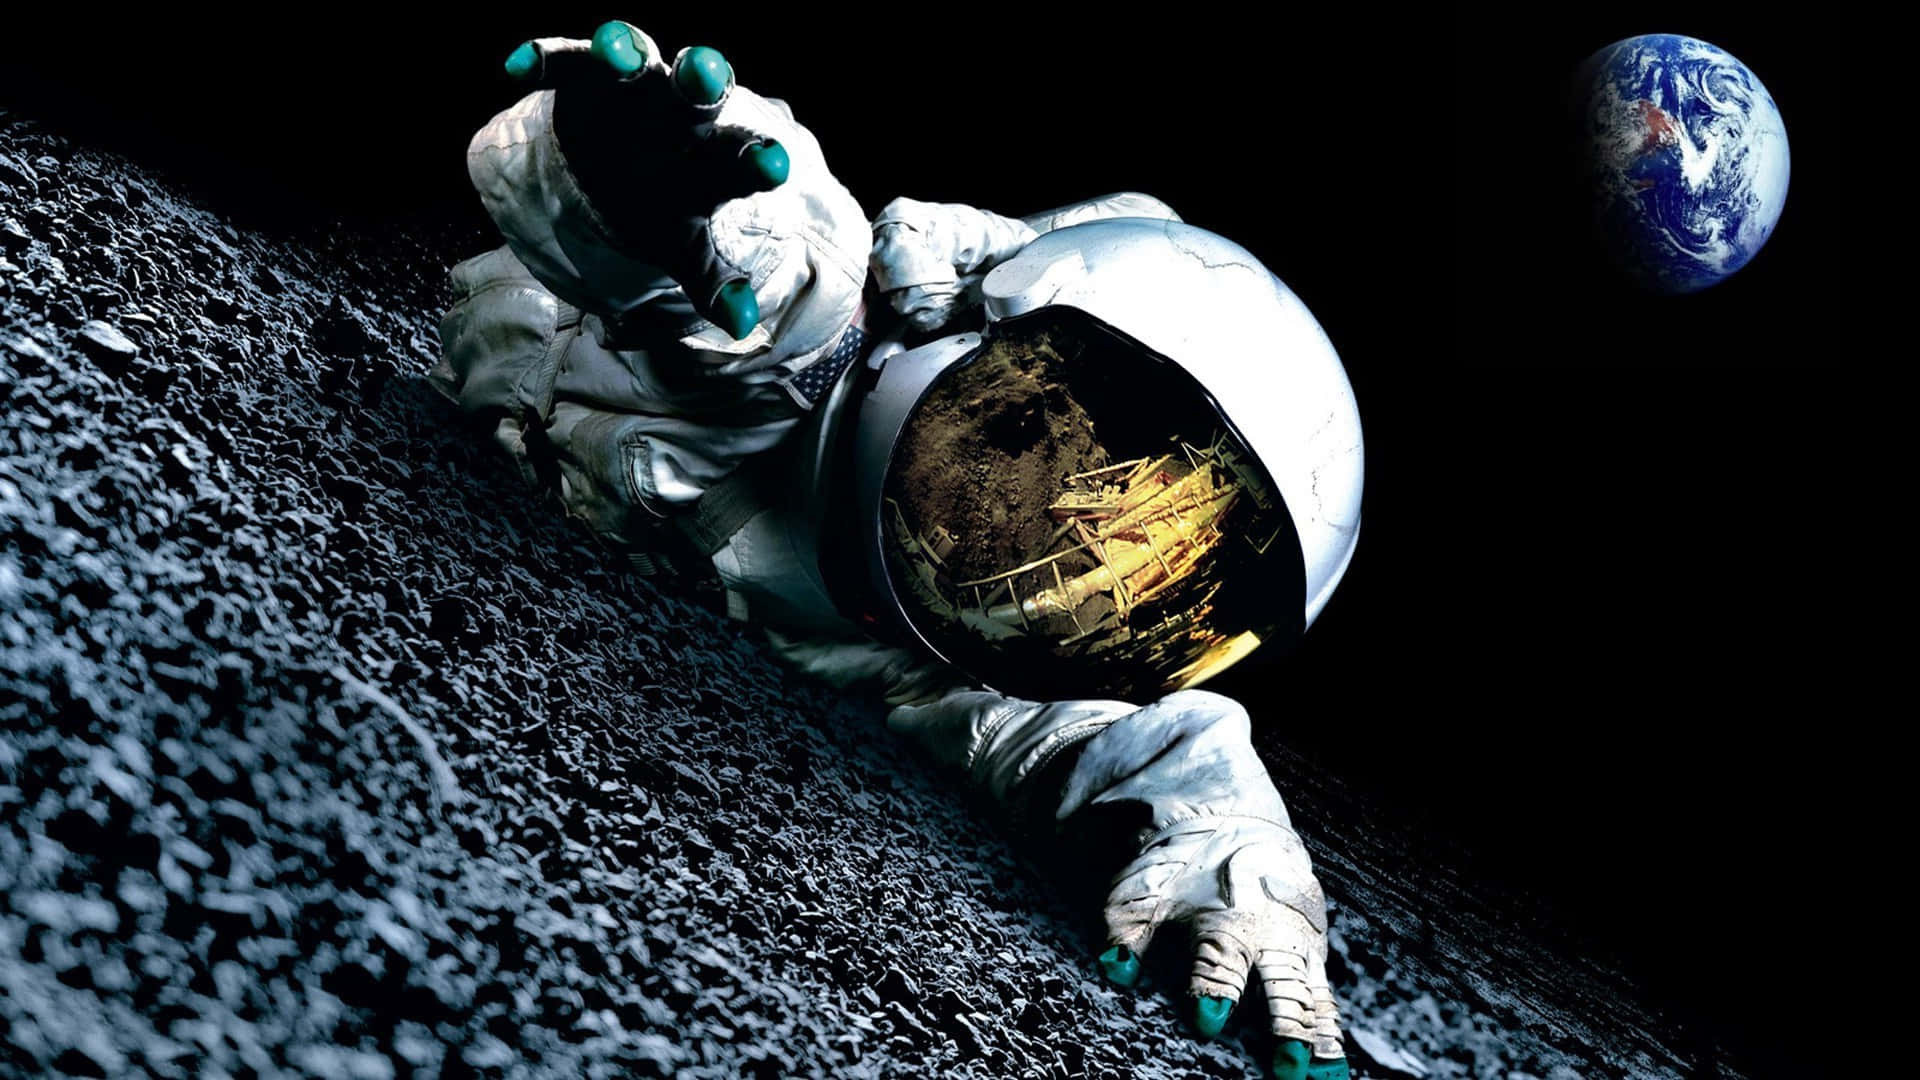 Download Astronaut Pictures | Wallpapers.com